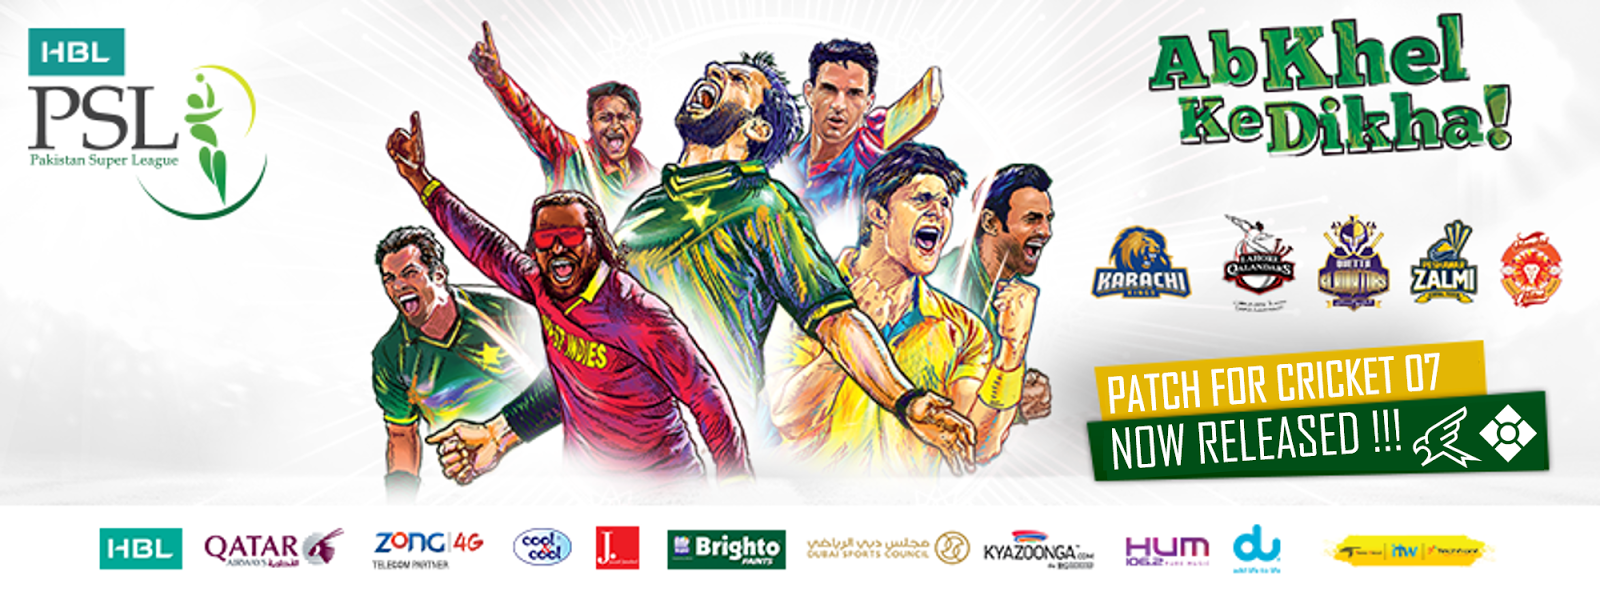 HBL PAKISTAN SUPER LEAGUE 2016 | WORLD WIDE GAME STUDIO ...